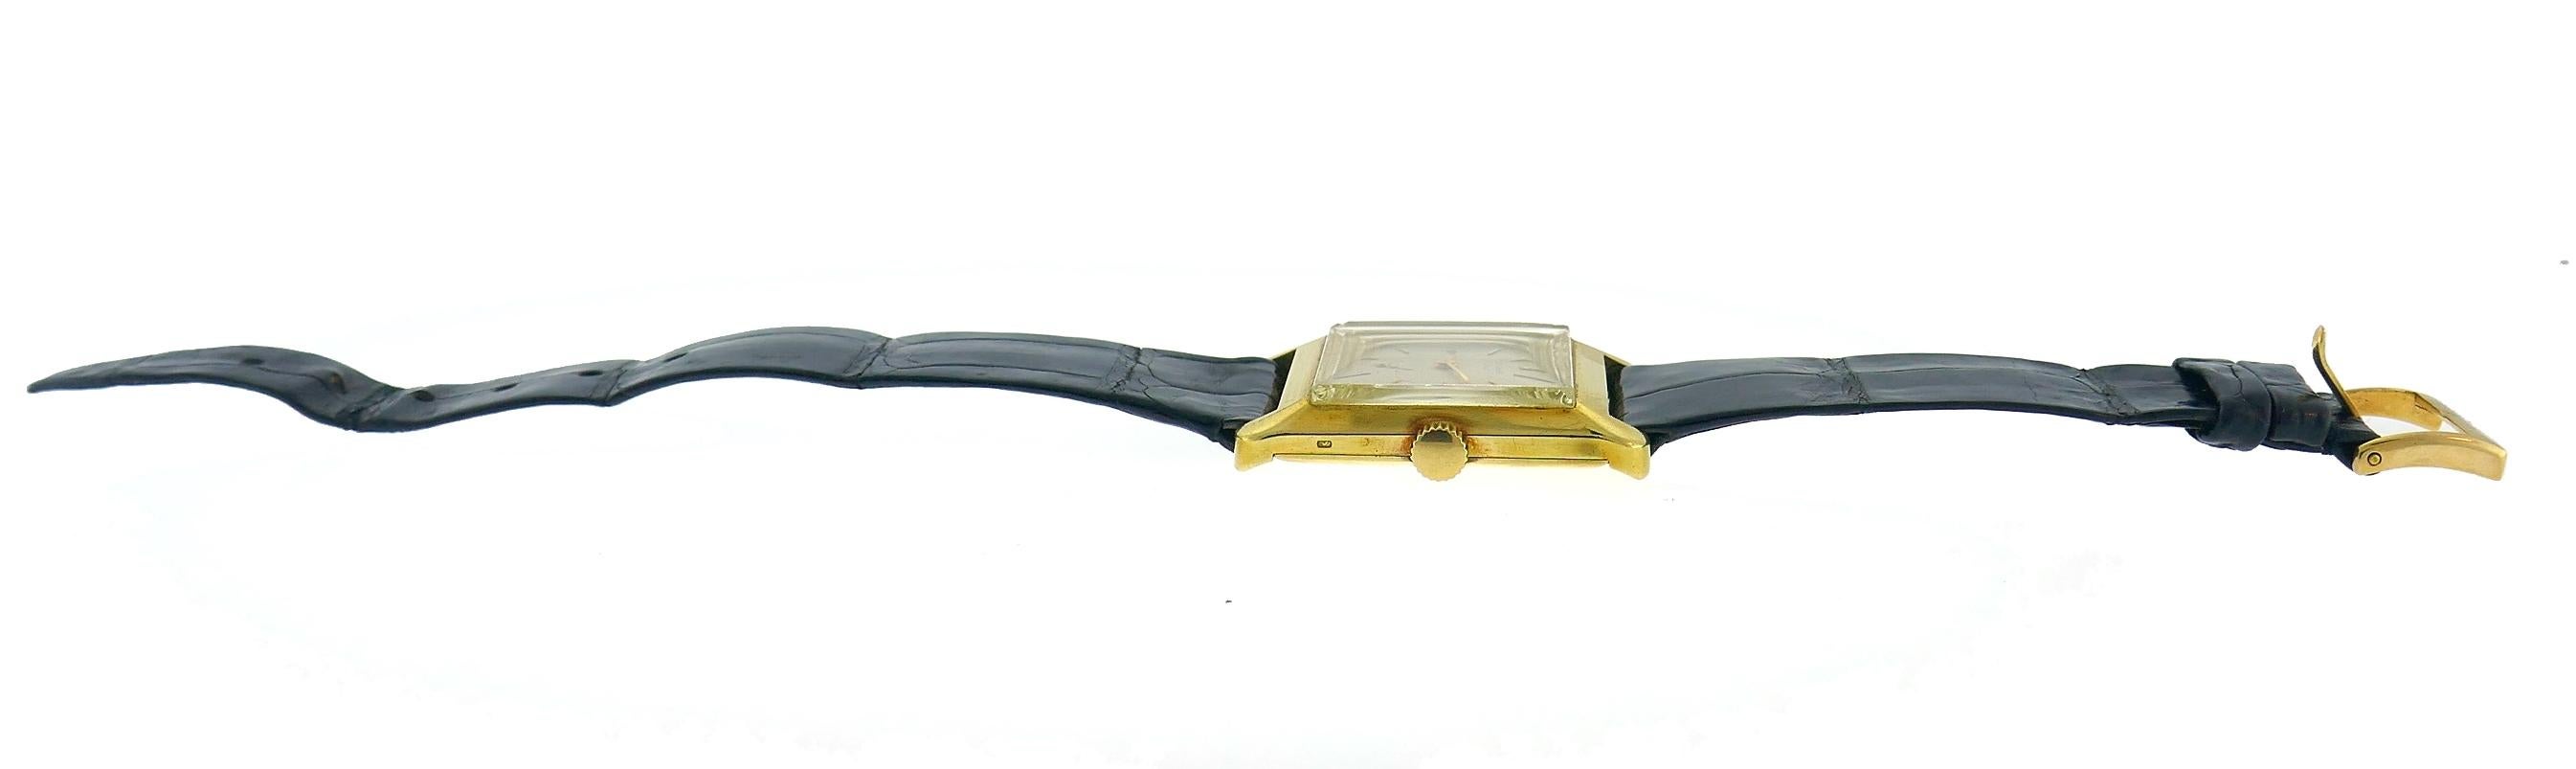 Patek Philippe 18k Gold Manual Wind Wristwatch For Sale 5